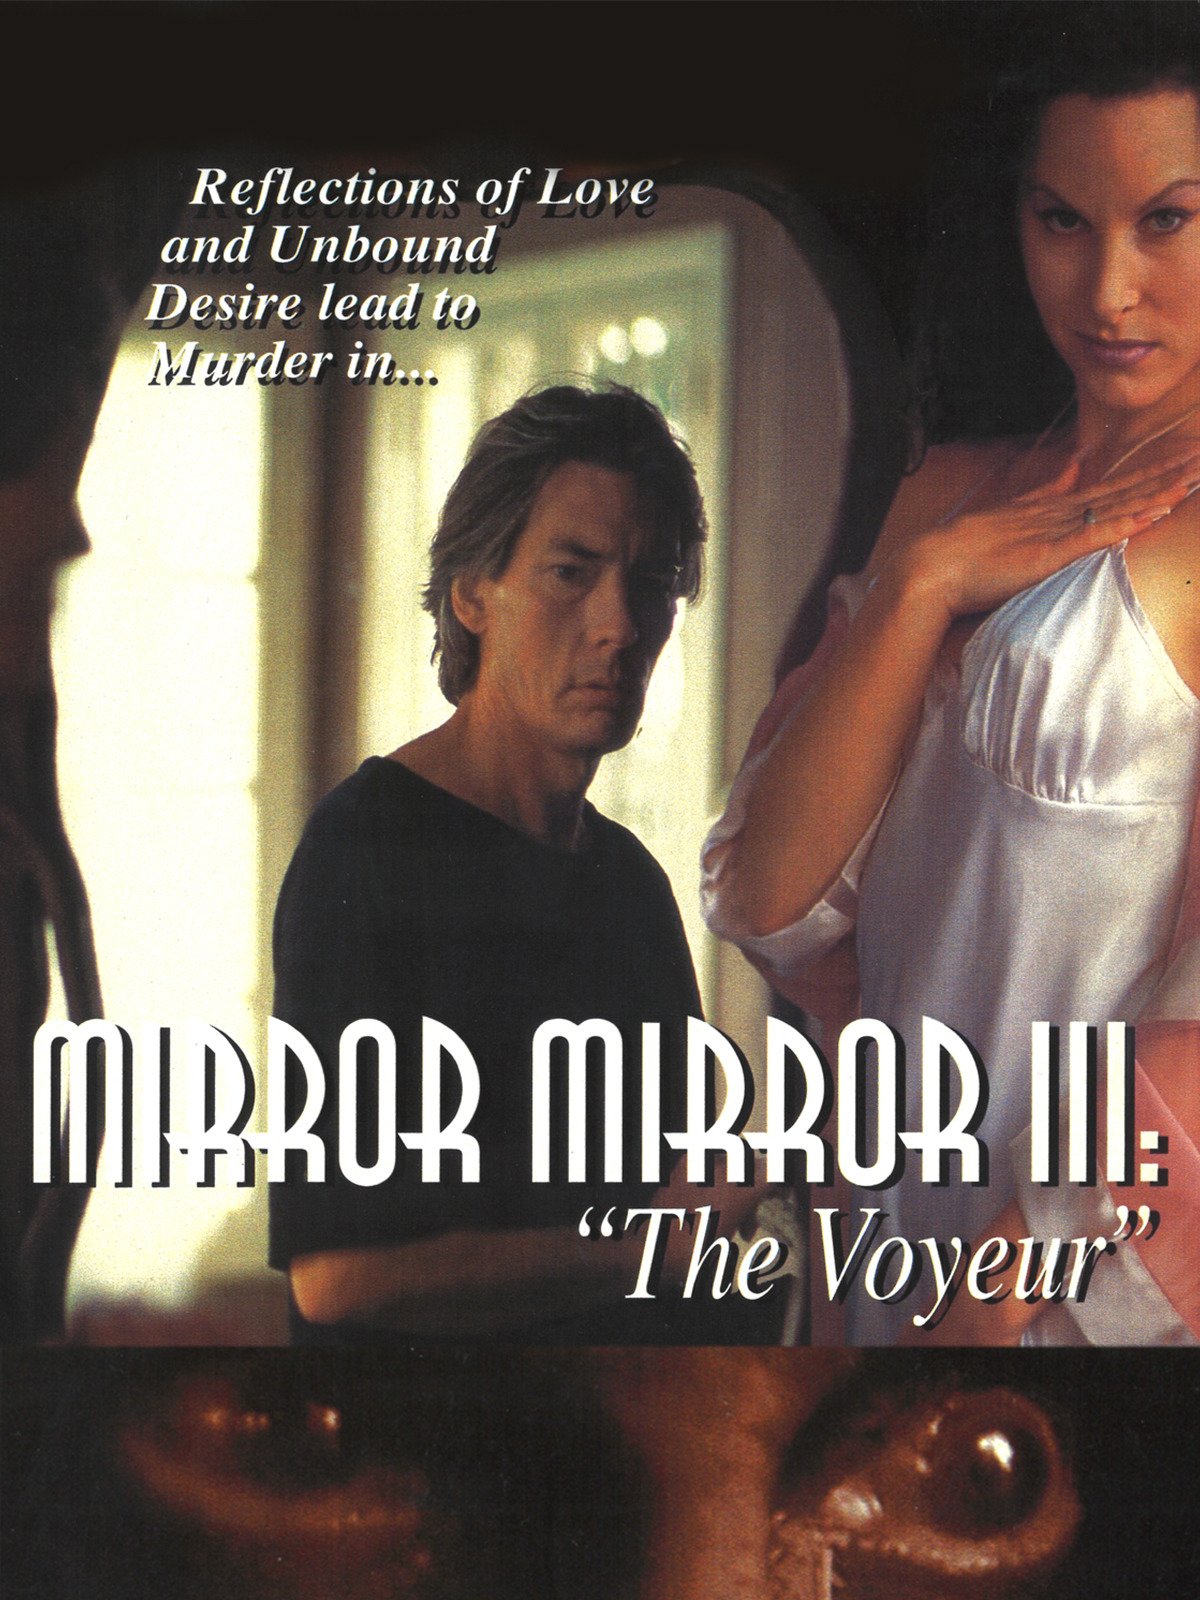 mirror mirror iii the voyeur Sex Images Hq